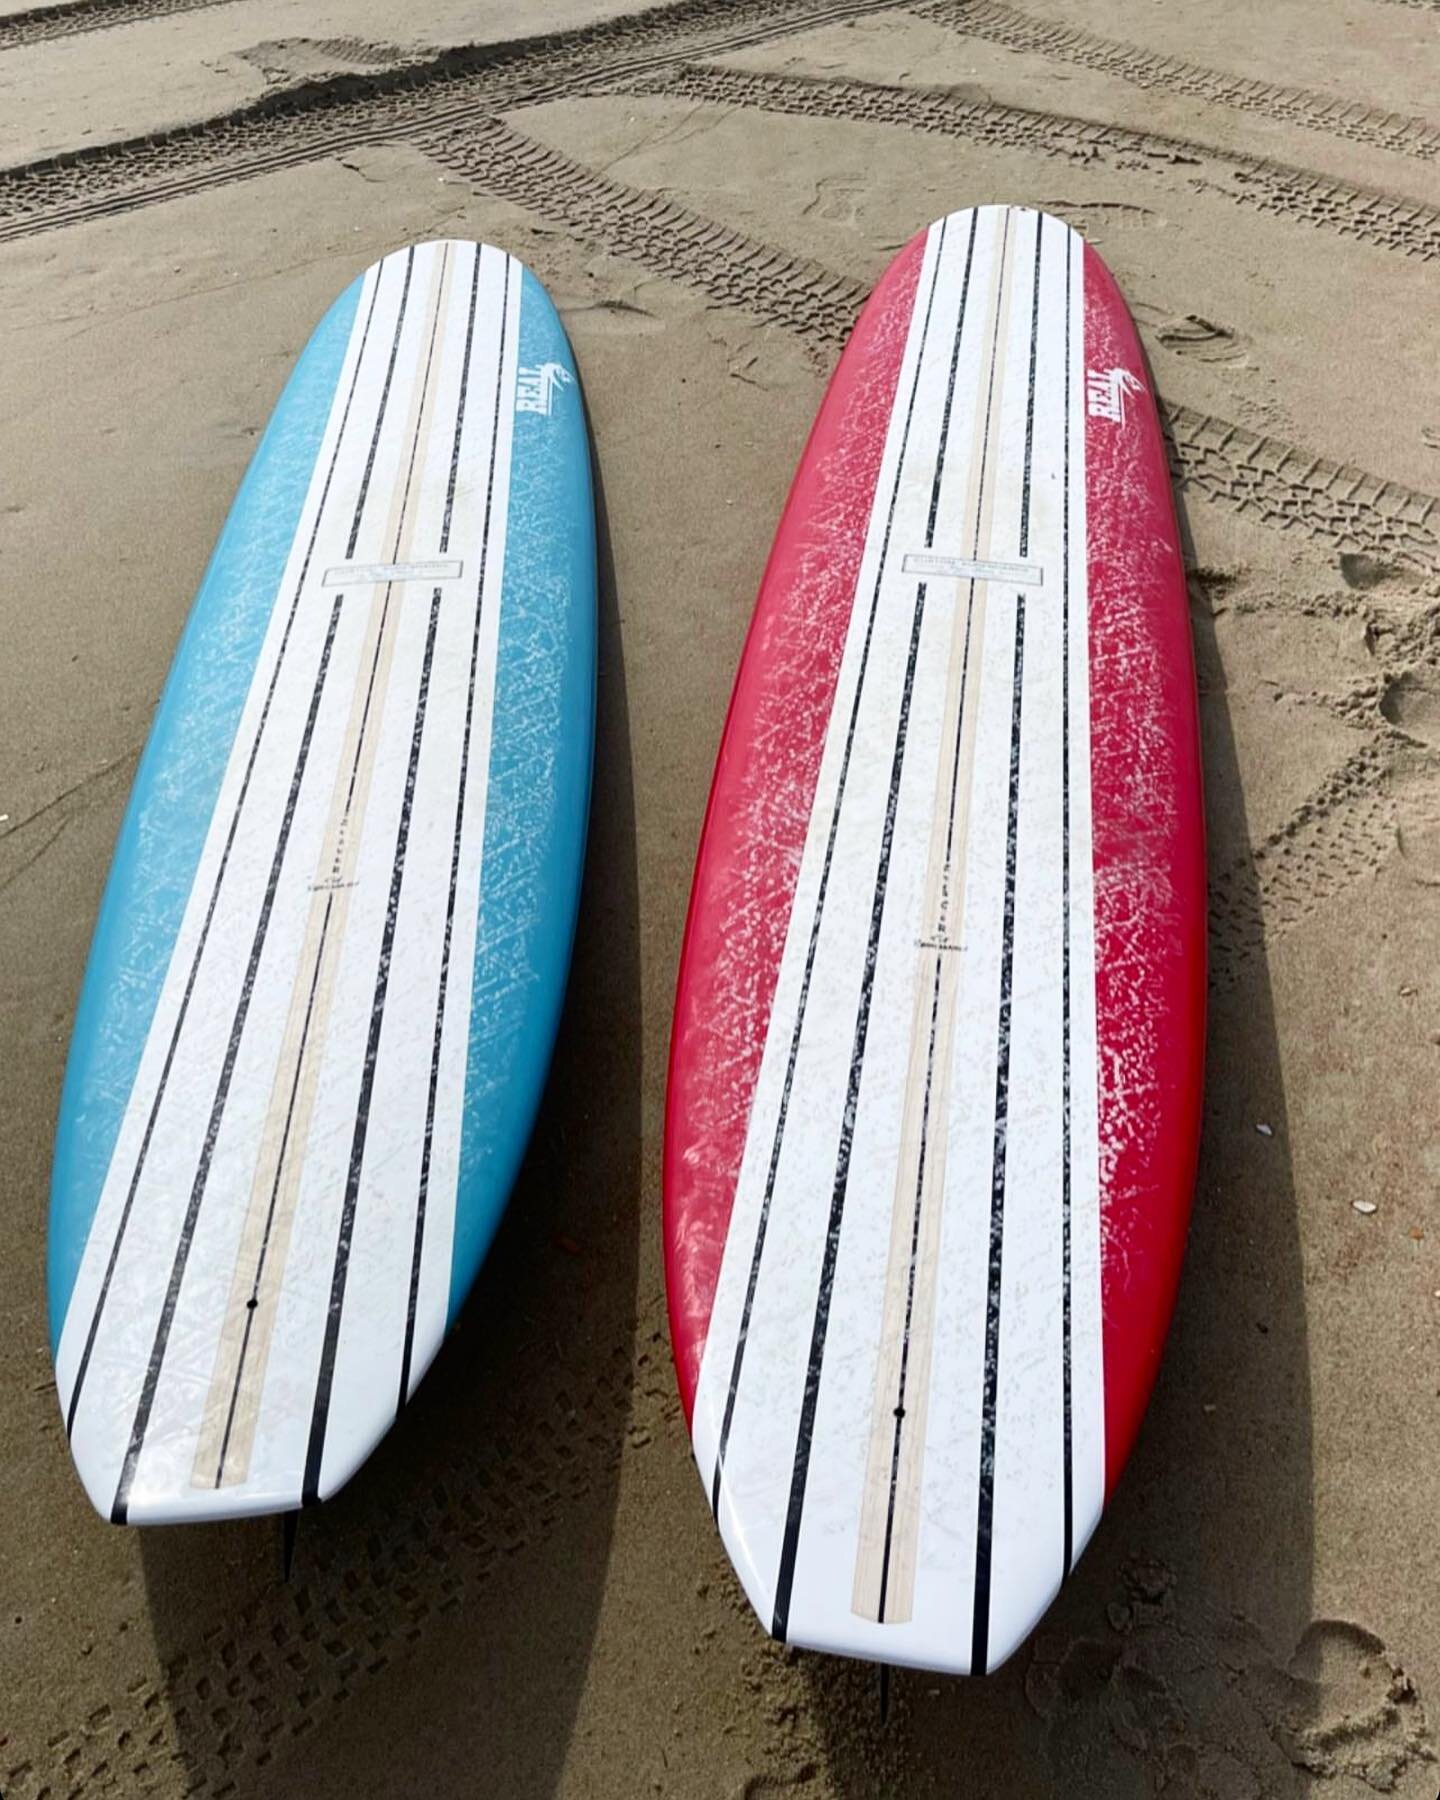 Two @surftechusa Renaissance models. #rogerhindssurfboards